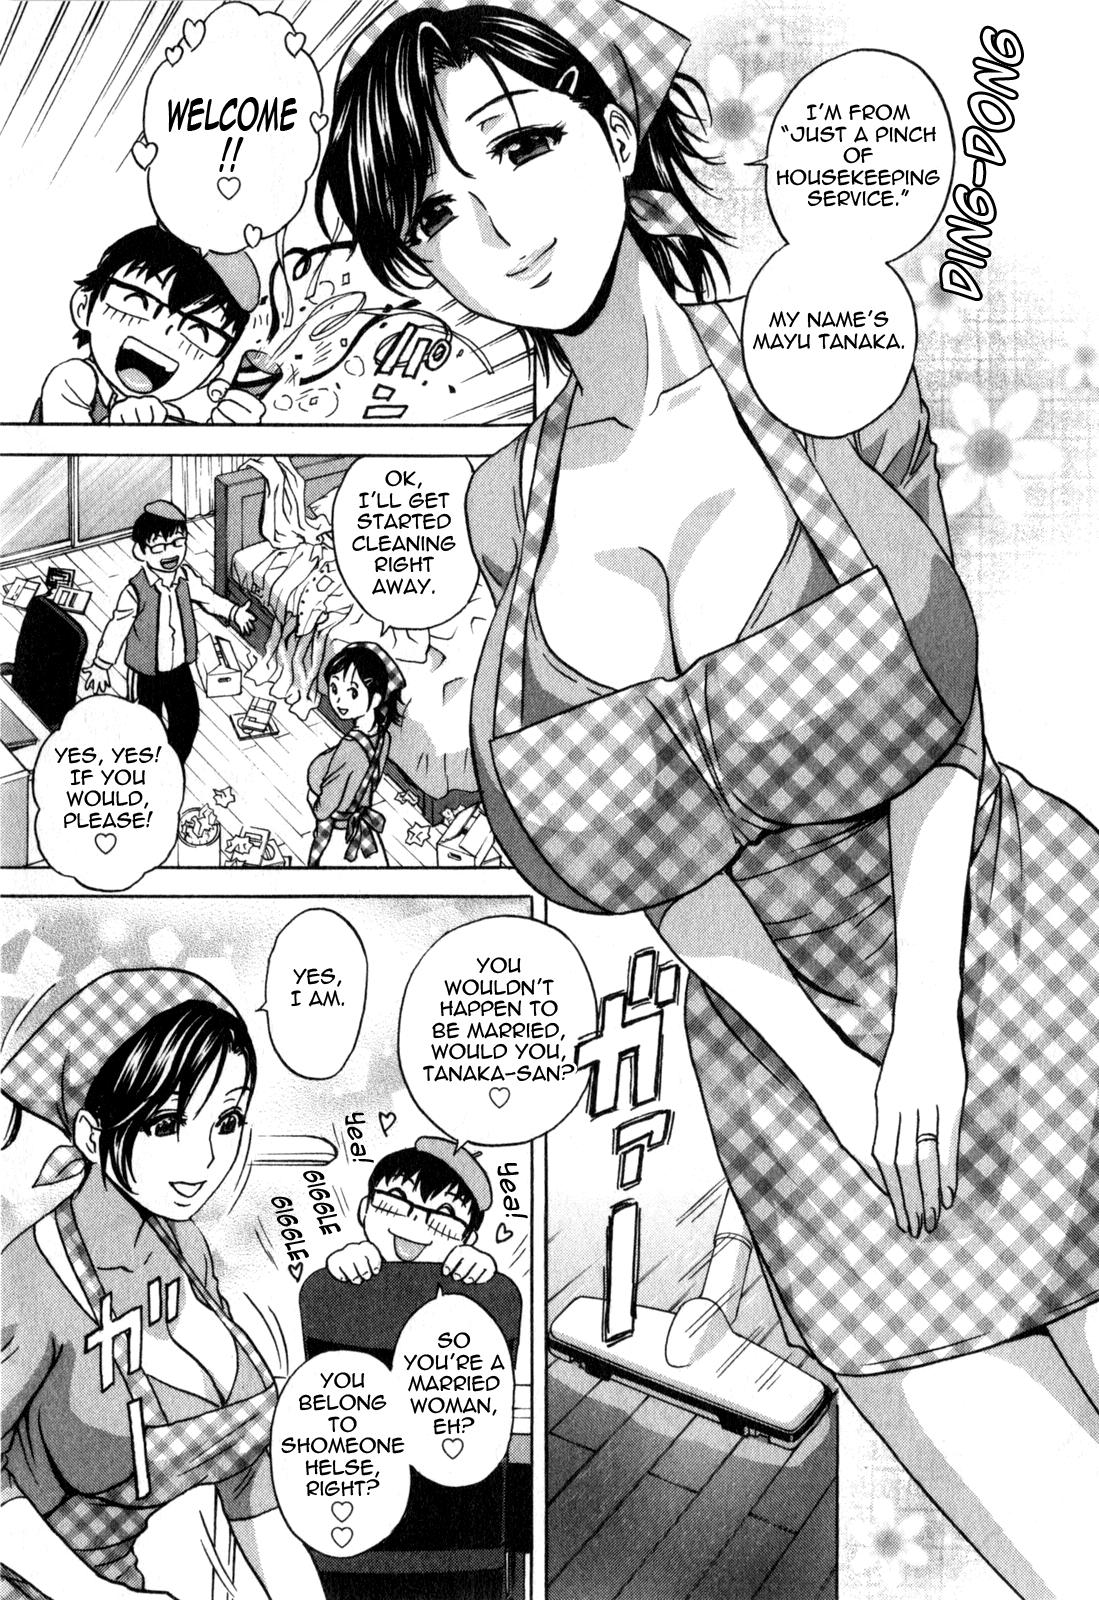 [Hidemaru] Life with Married Women Just Like a Manga 3 - Ch. 1-8 [English] {Tadanohito} 73